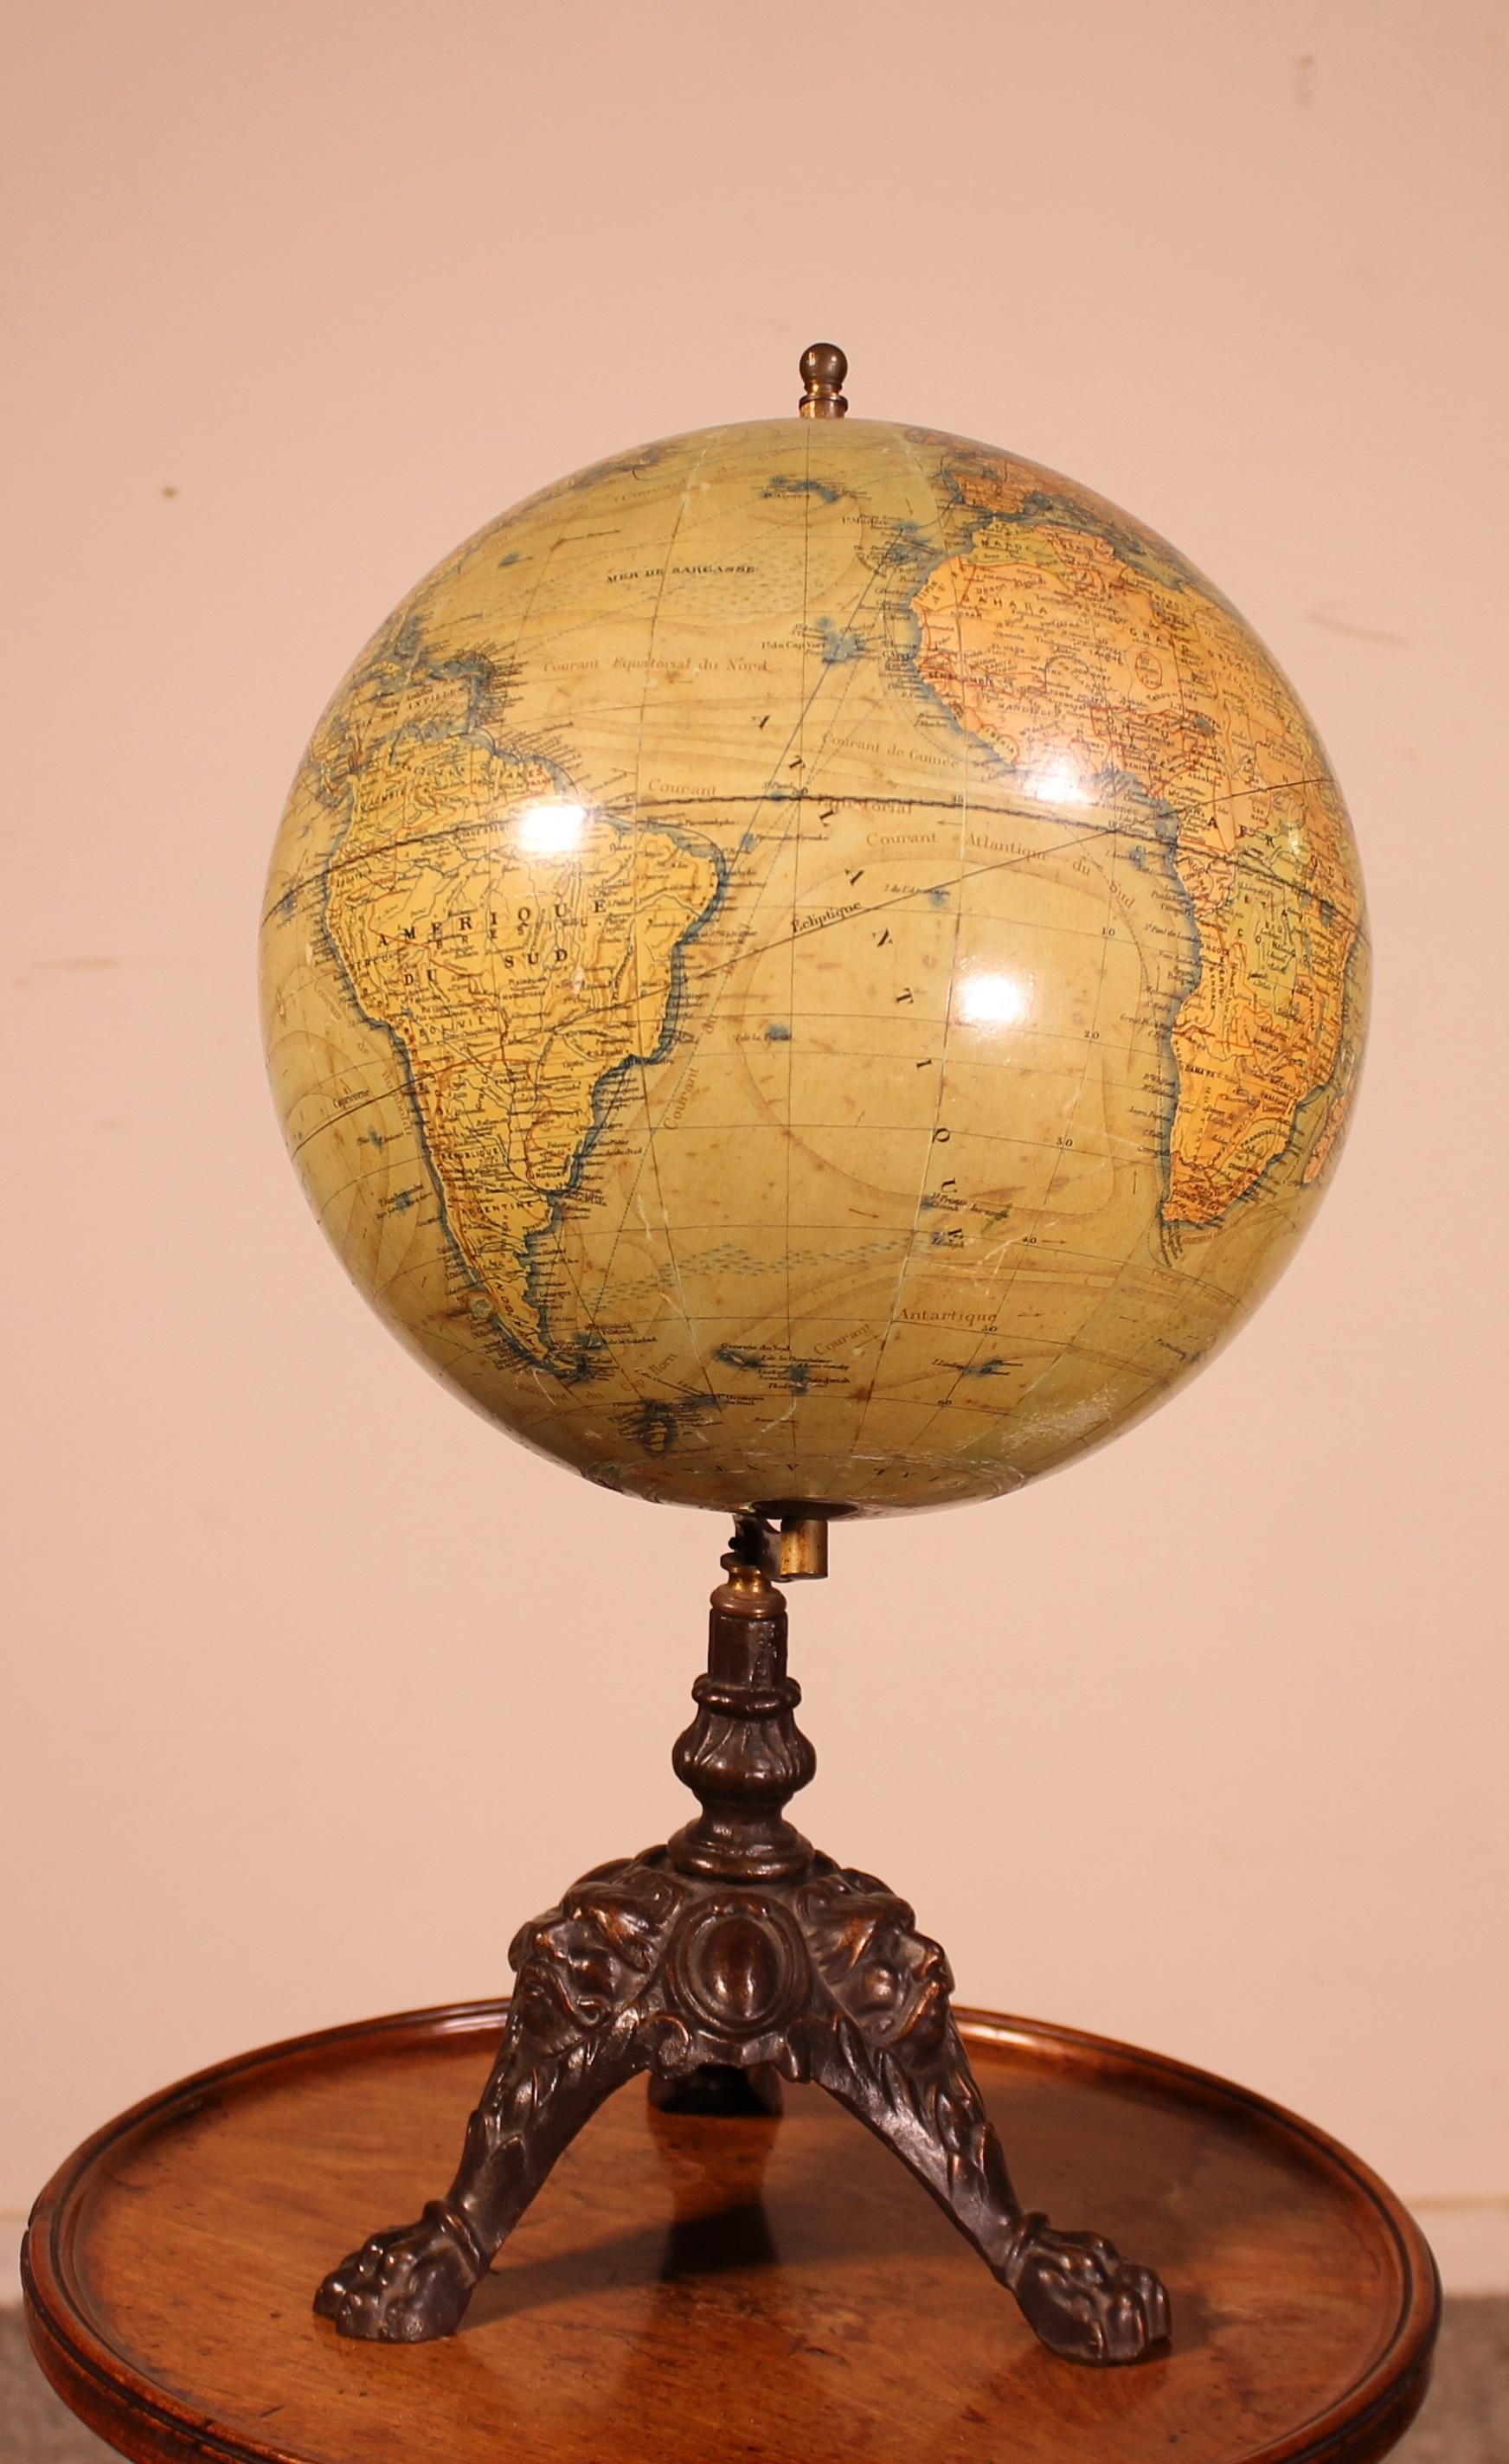 French Terrestial Globe from J.Lebègue & Cie circa 1890 from Paris